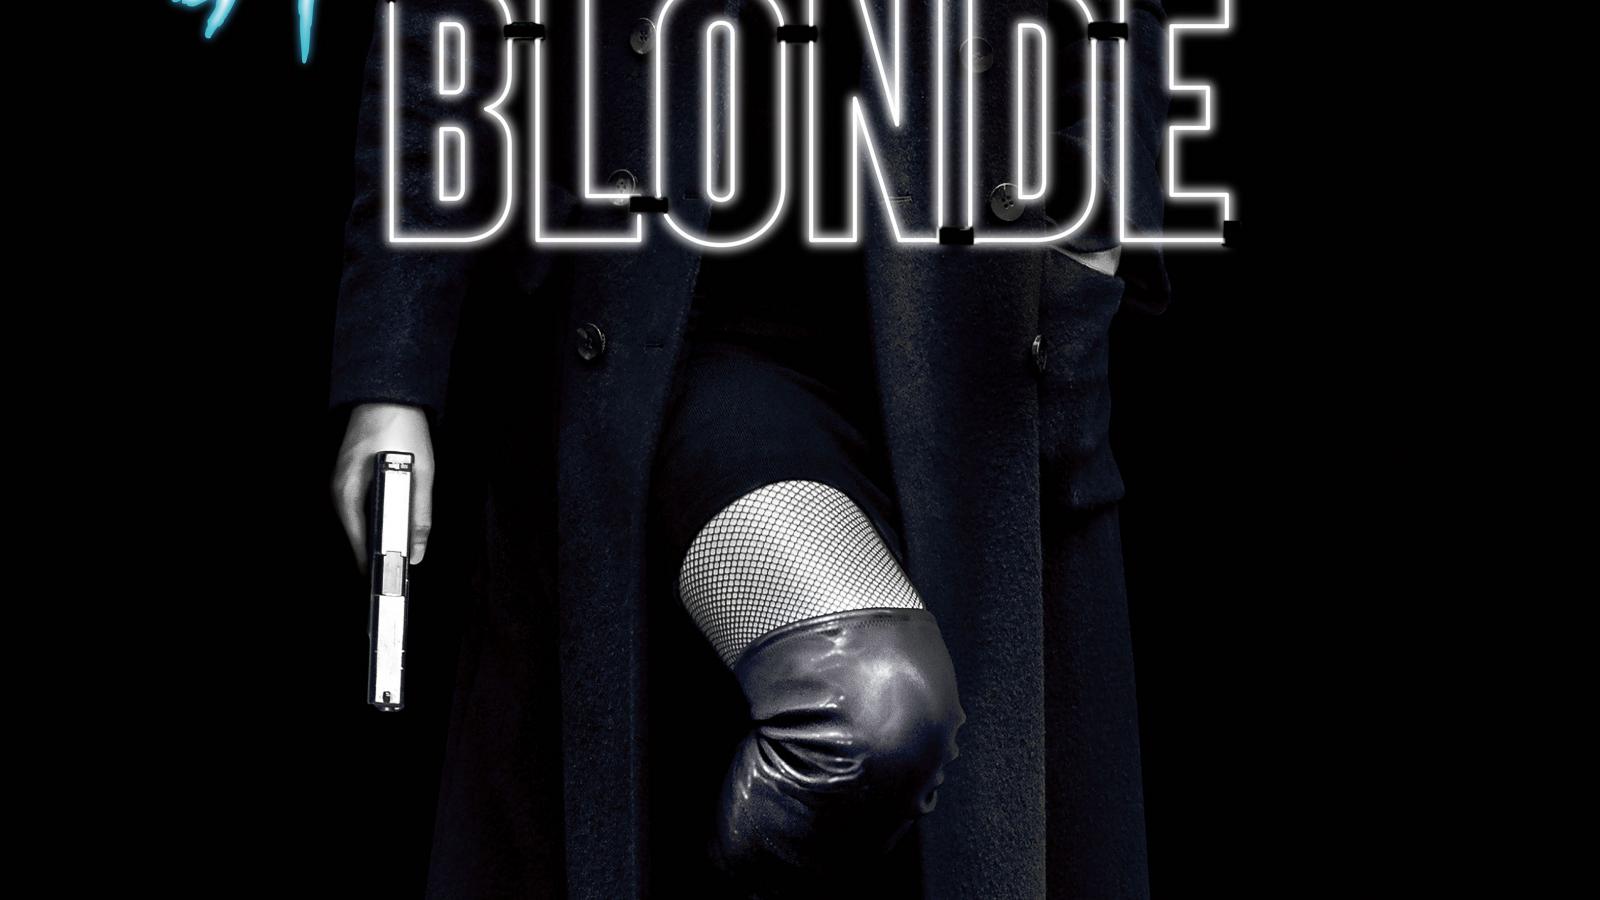 atomic_blonde_teaser_poster.jpg